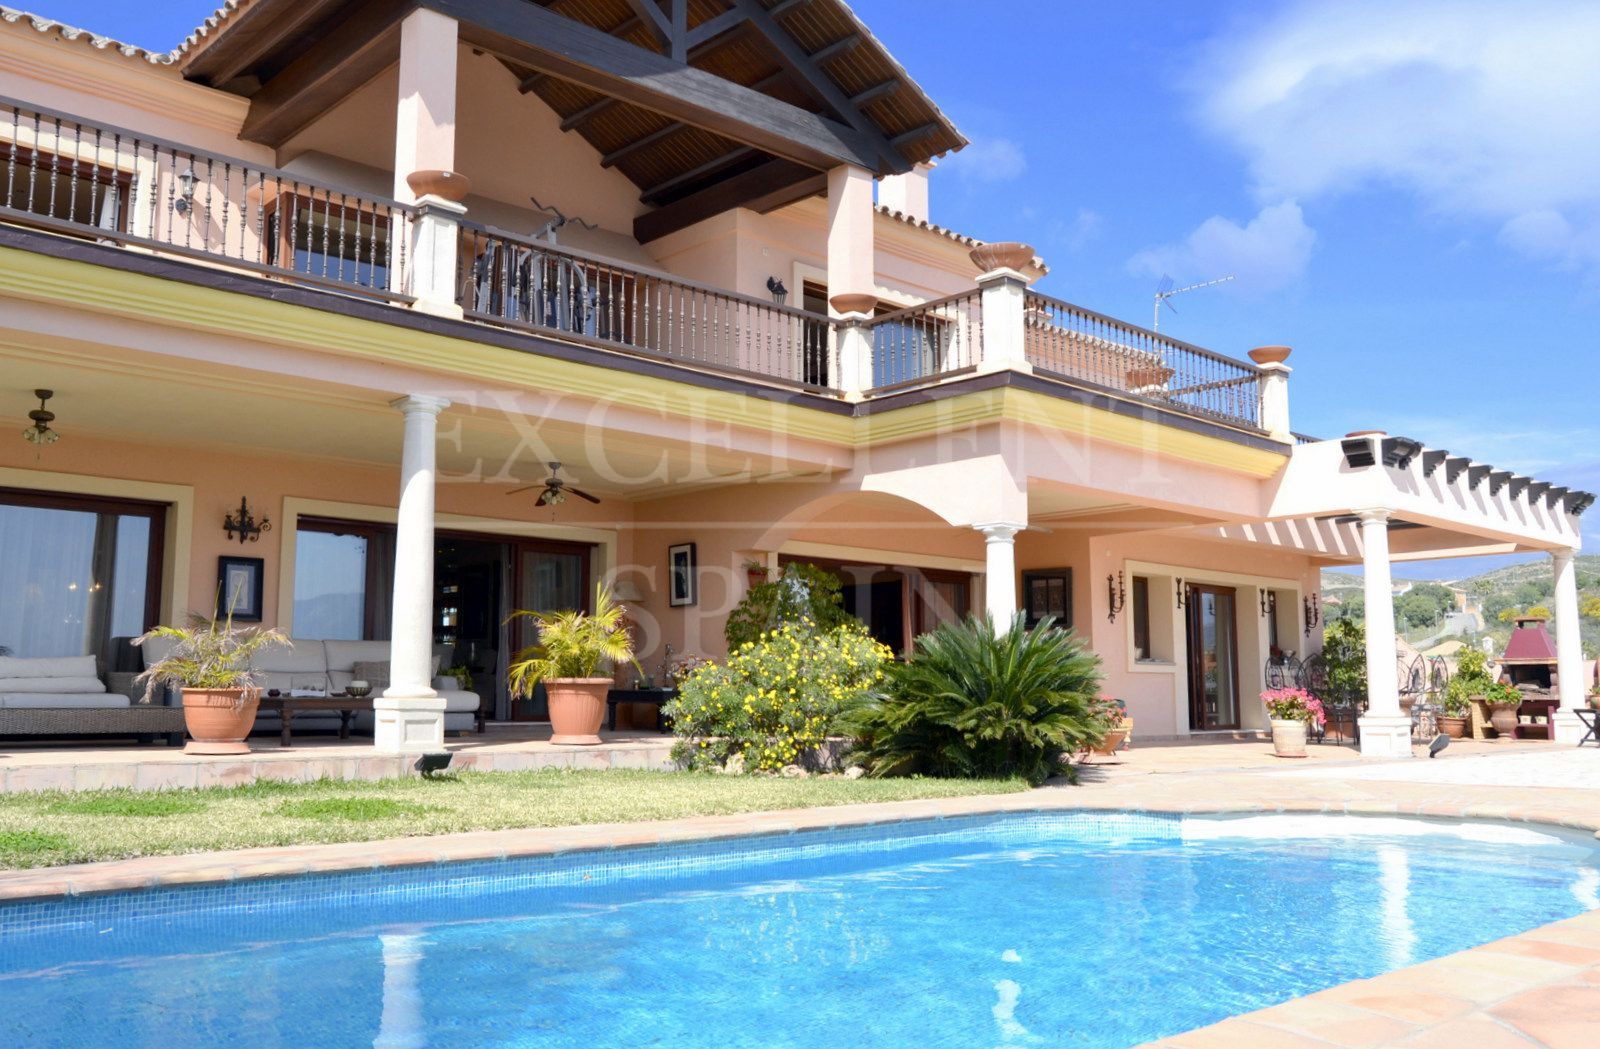 La Alqueria, Benahavis, Costa del Sol, fabelhafte Villa zum Verkauf